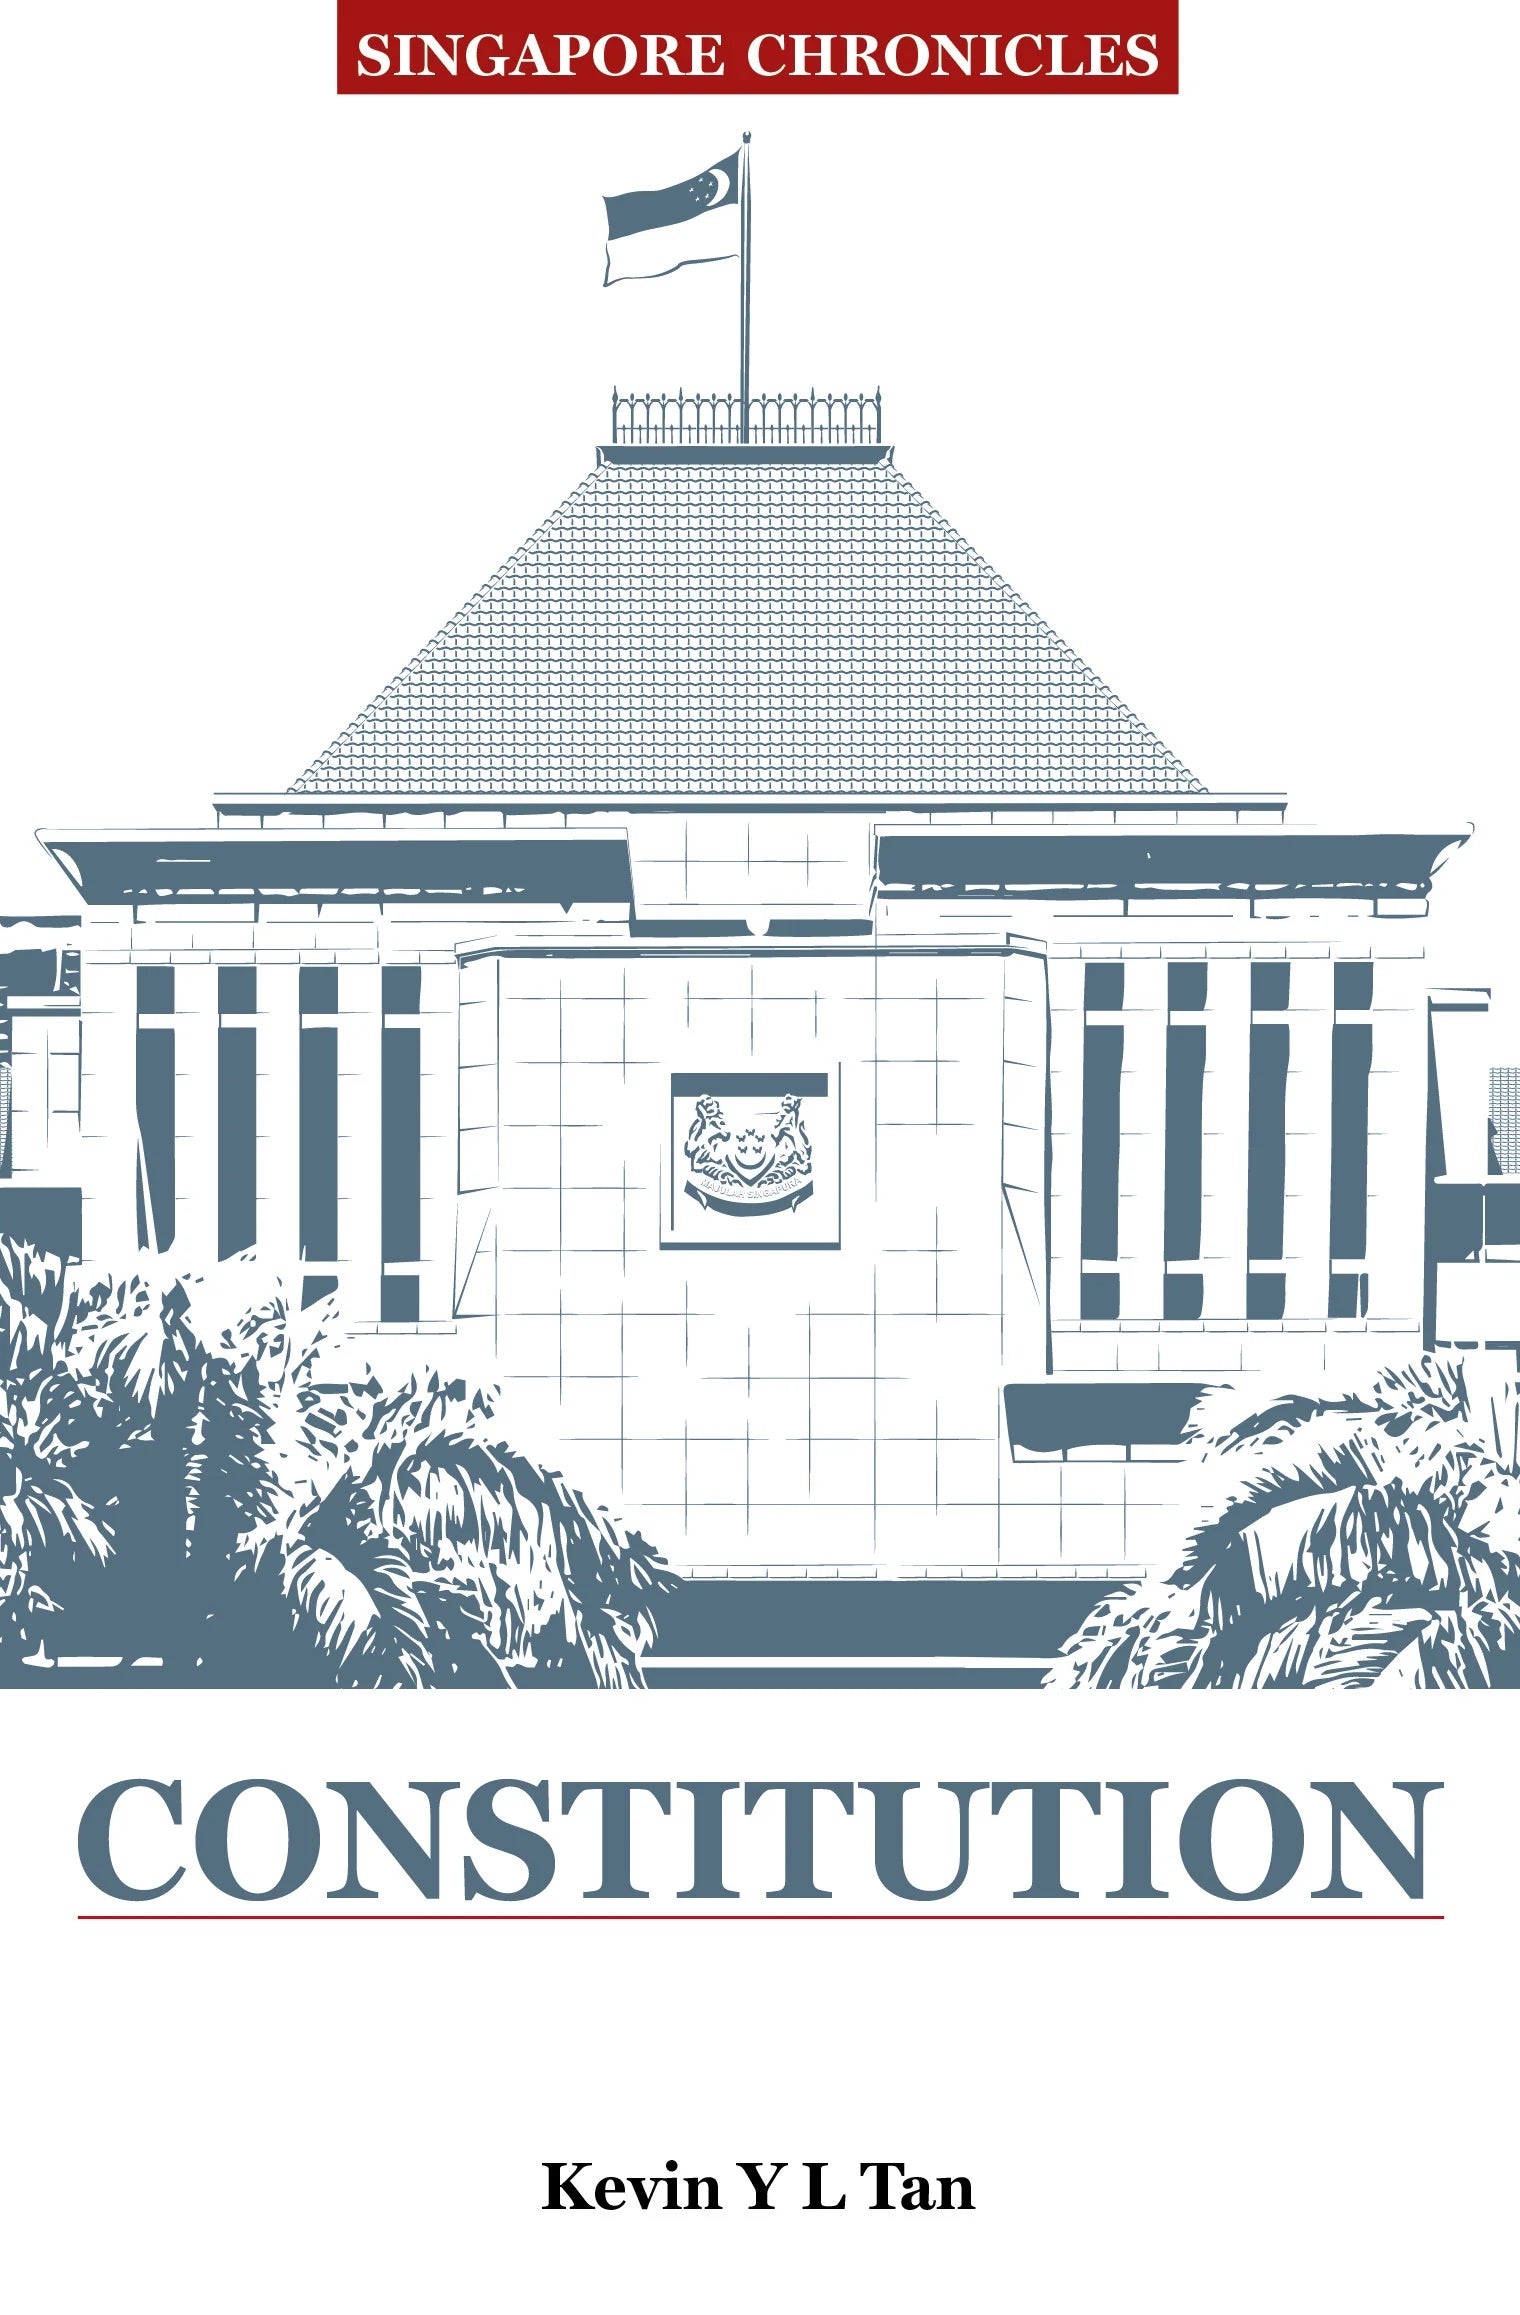 Singapore Chronicles: Constitution